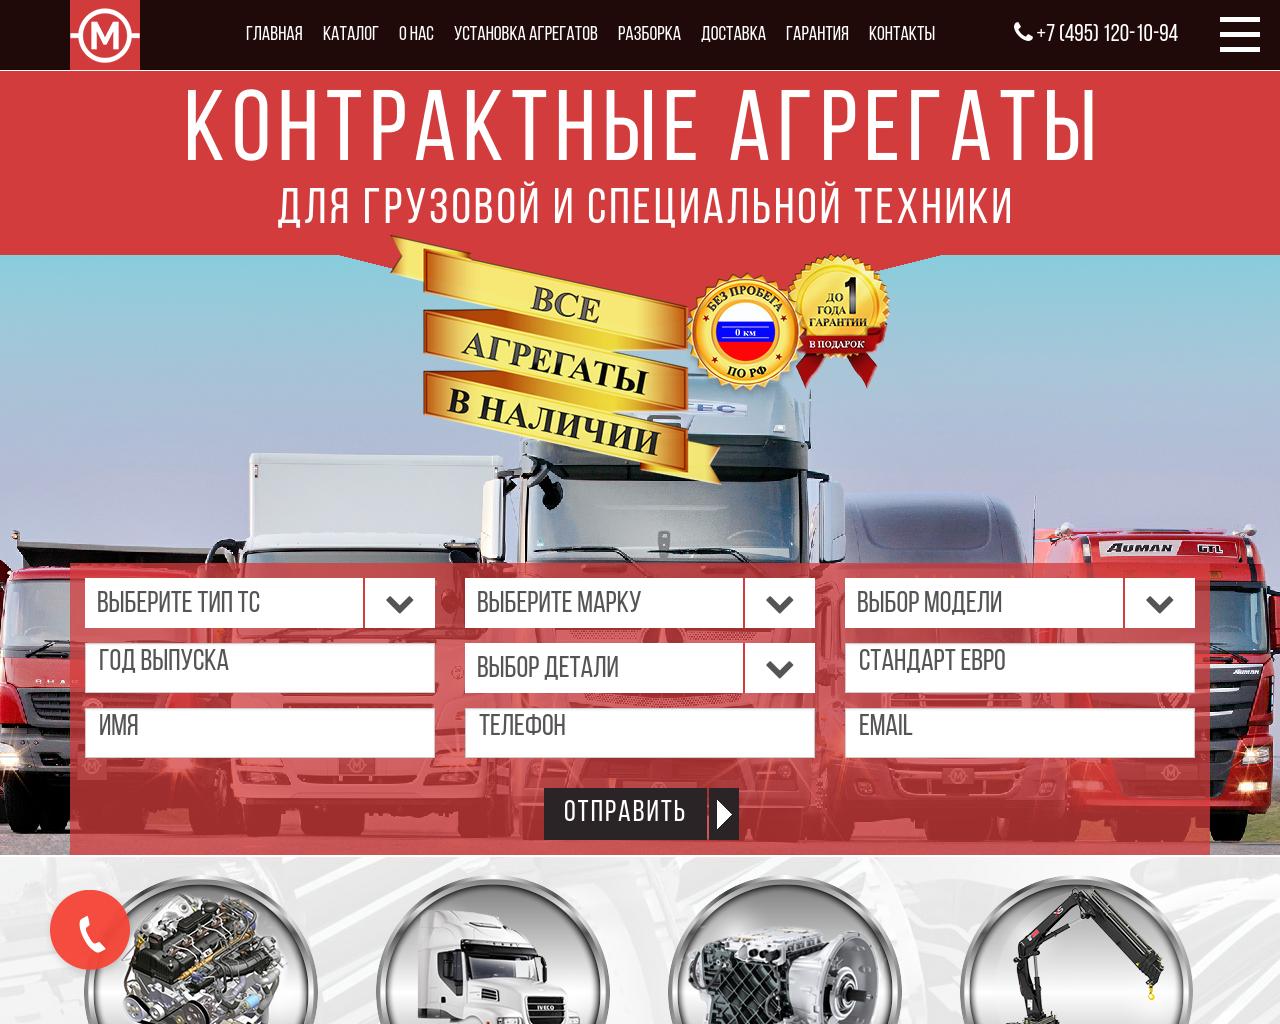 Изображение сайта world-of-trucks.ru в разрешении 1280x1024